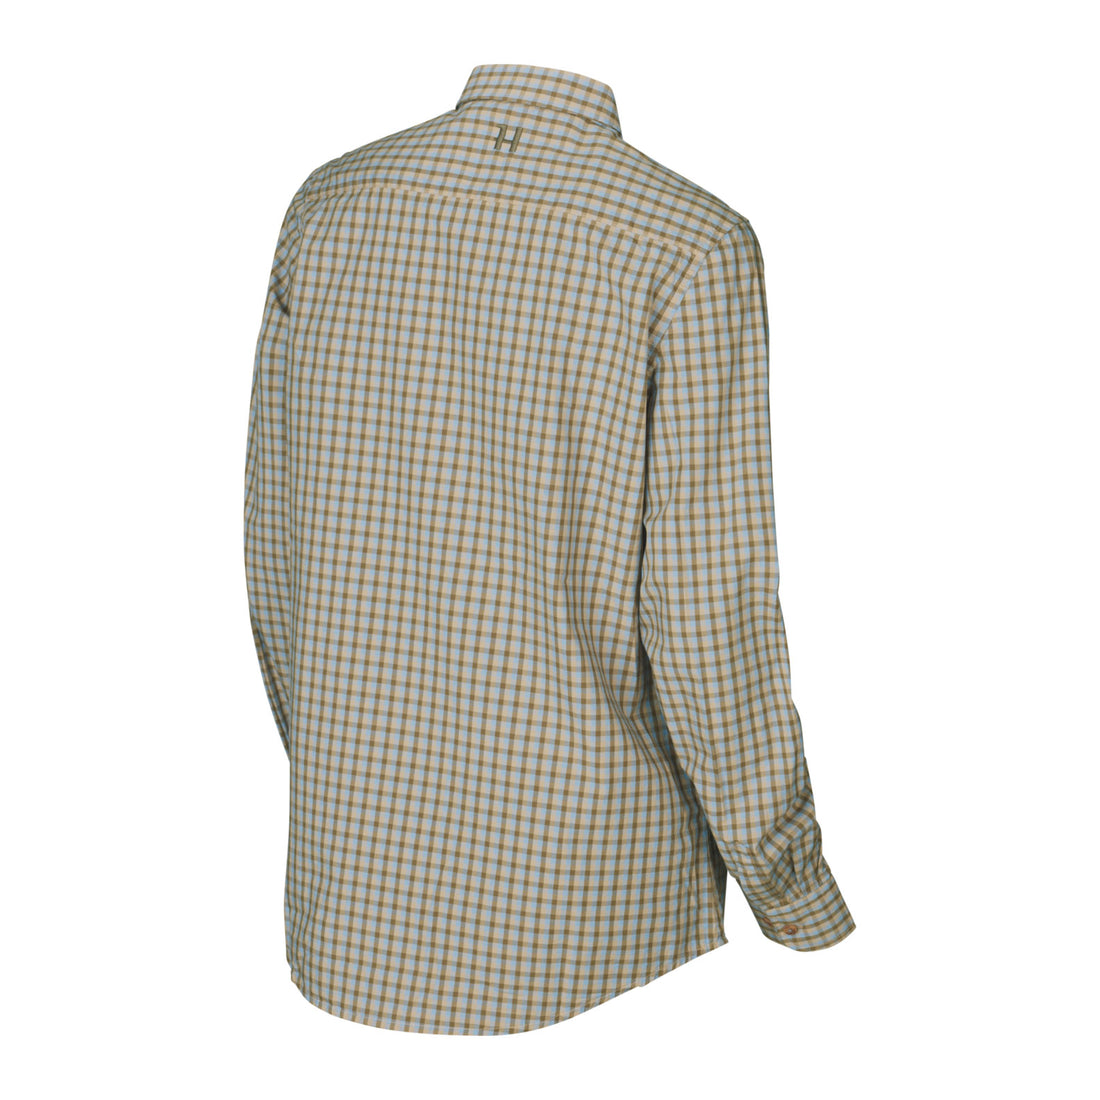 Harkila-Selja-Lady-Long-Sleeve-Check-Shirt